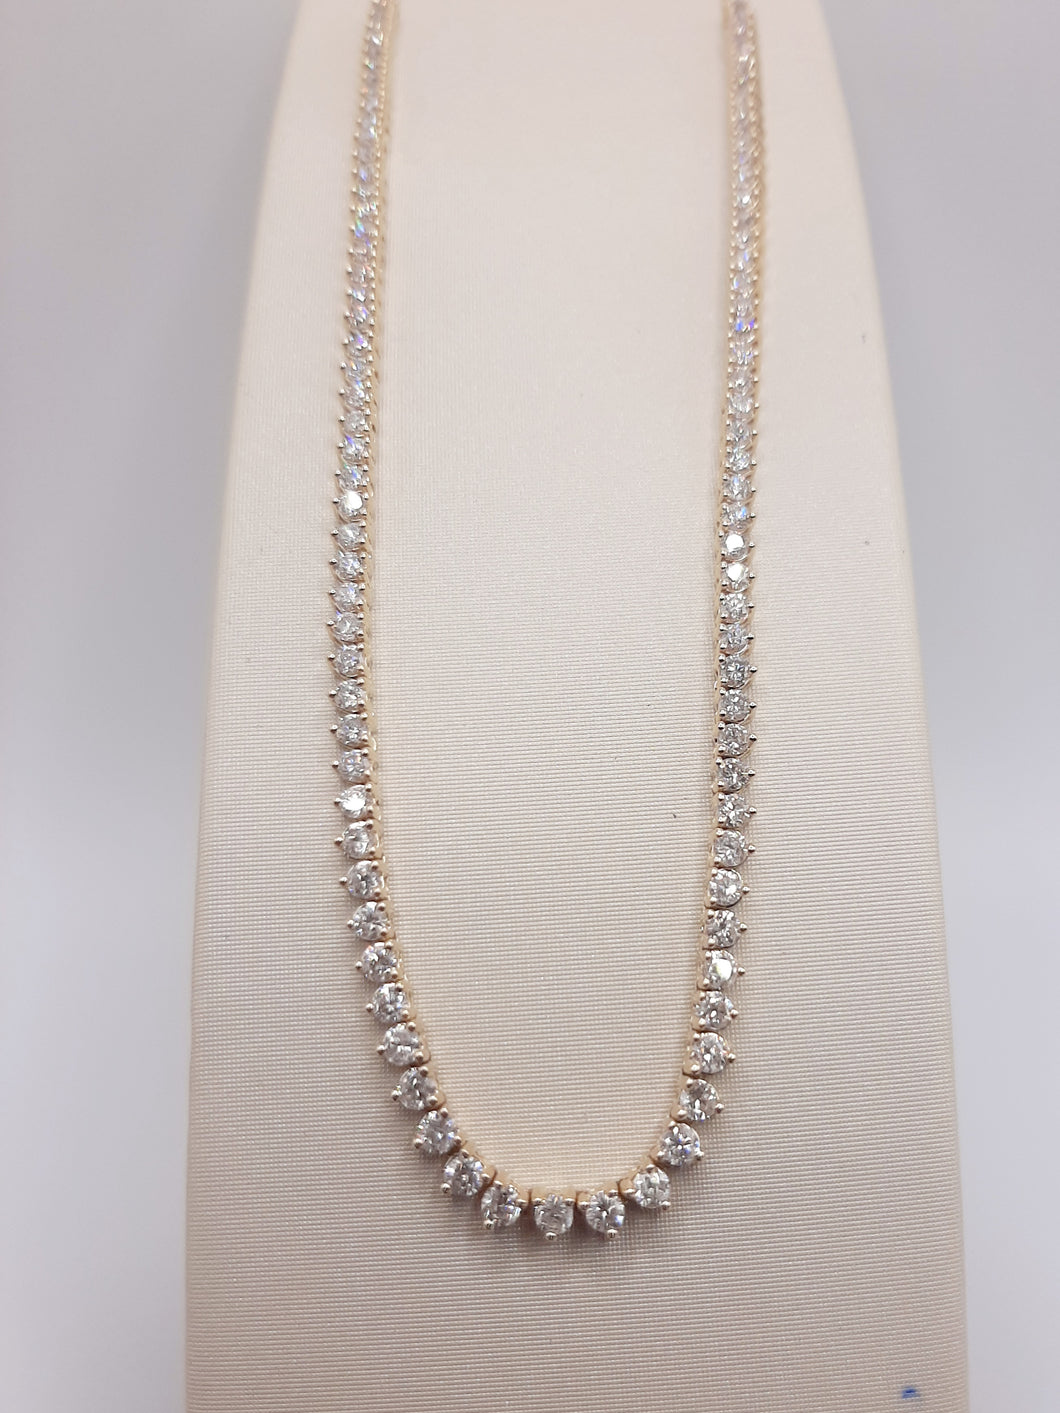 14Kt yellow gold riviera necklace featuring 3 prong set 3.0 carat of natural diamonds 18